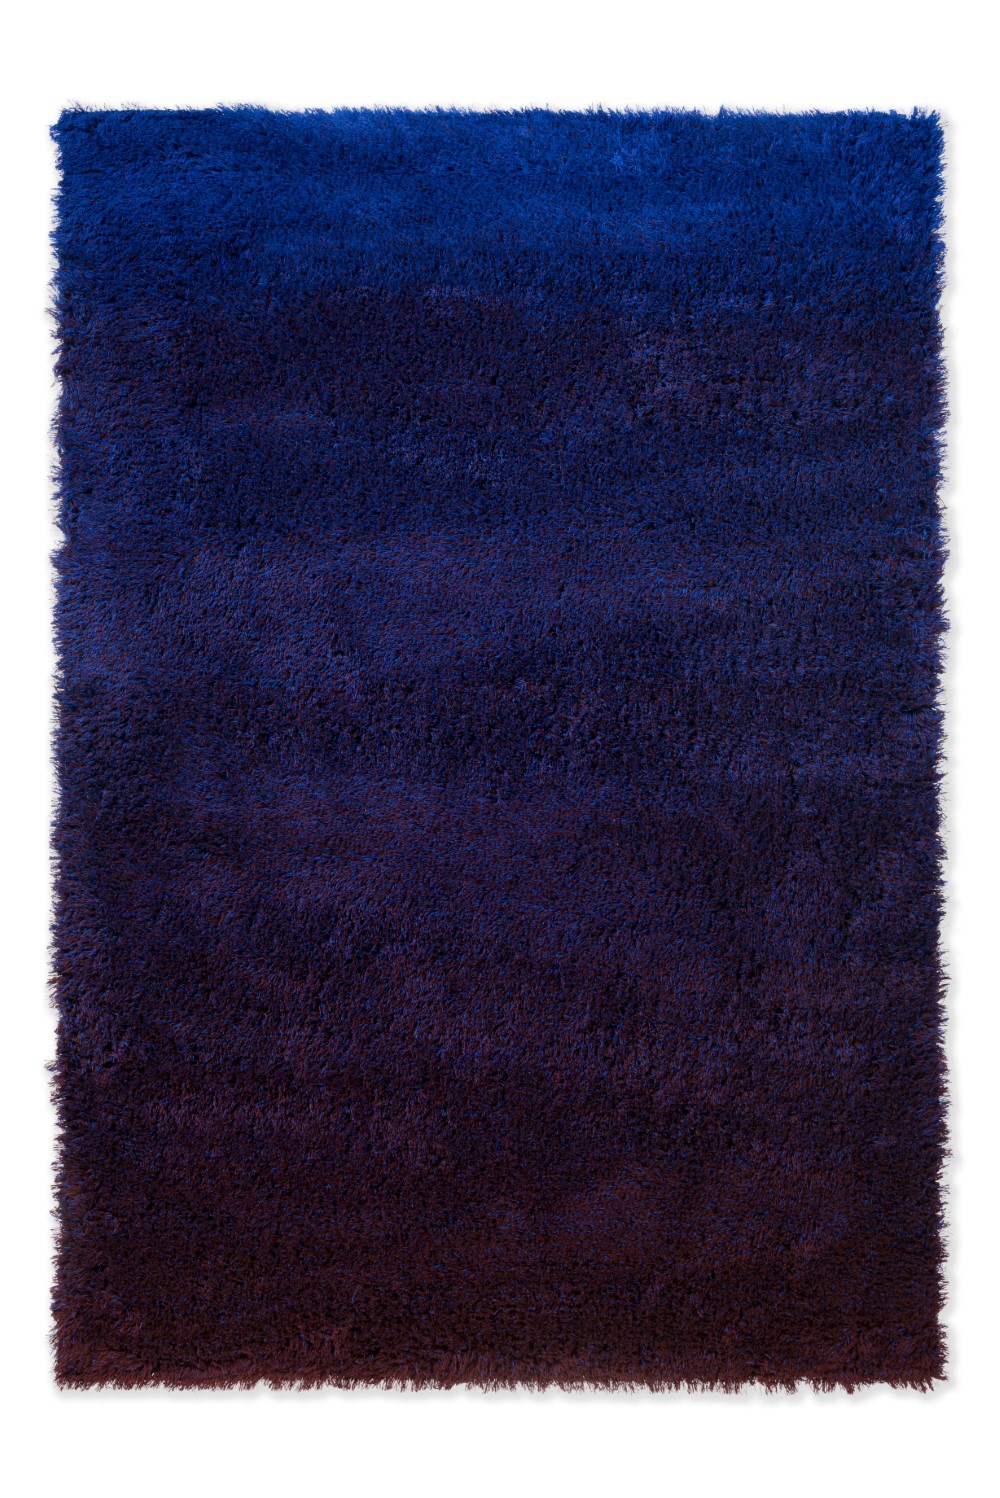 brink-campman-rug-shade-high-electric-blue-aubergine-011918